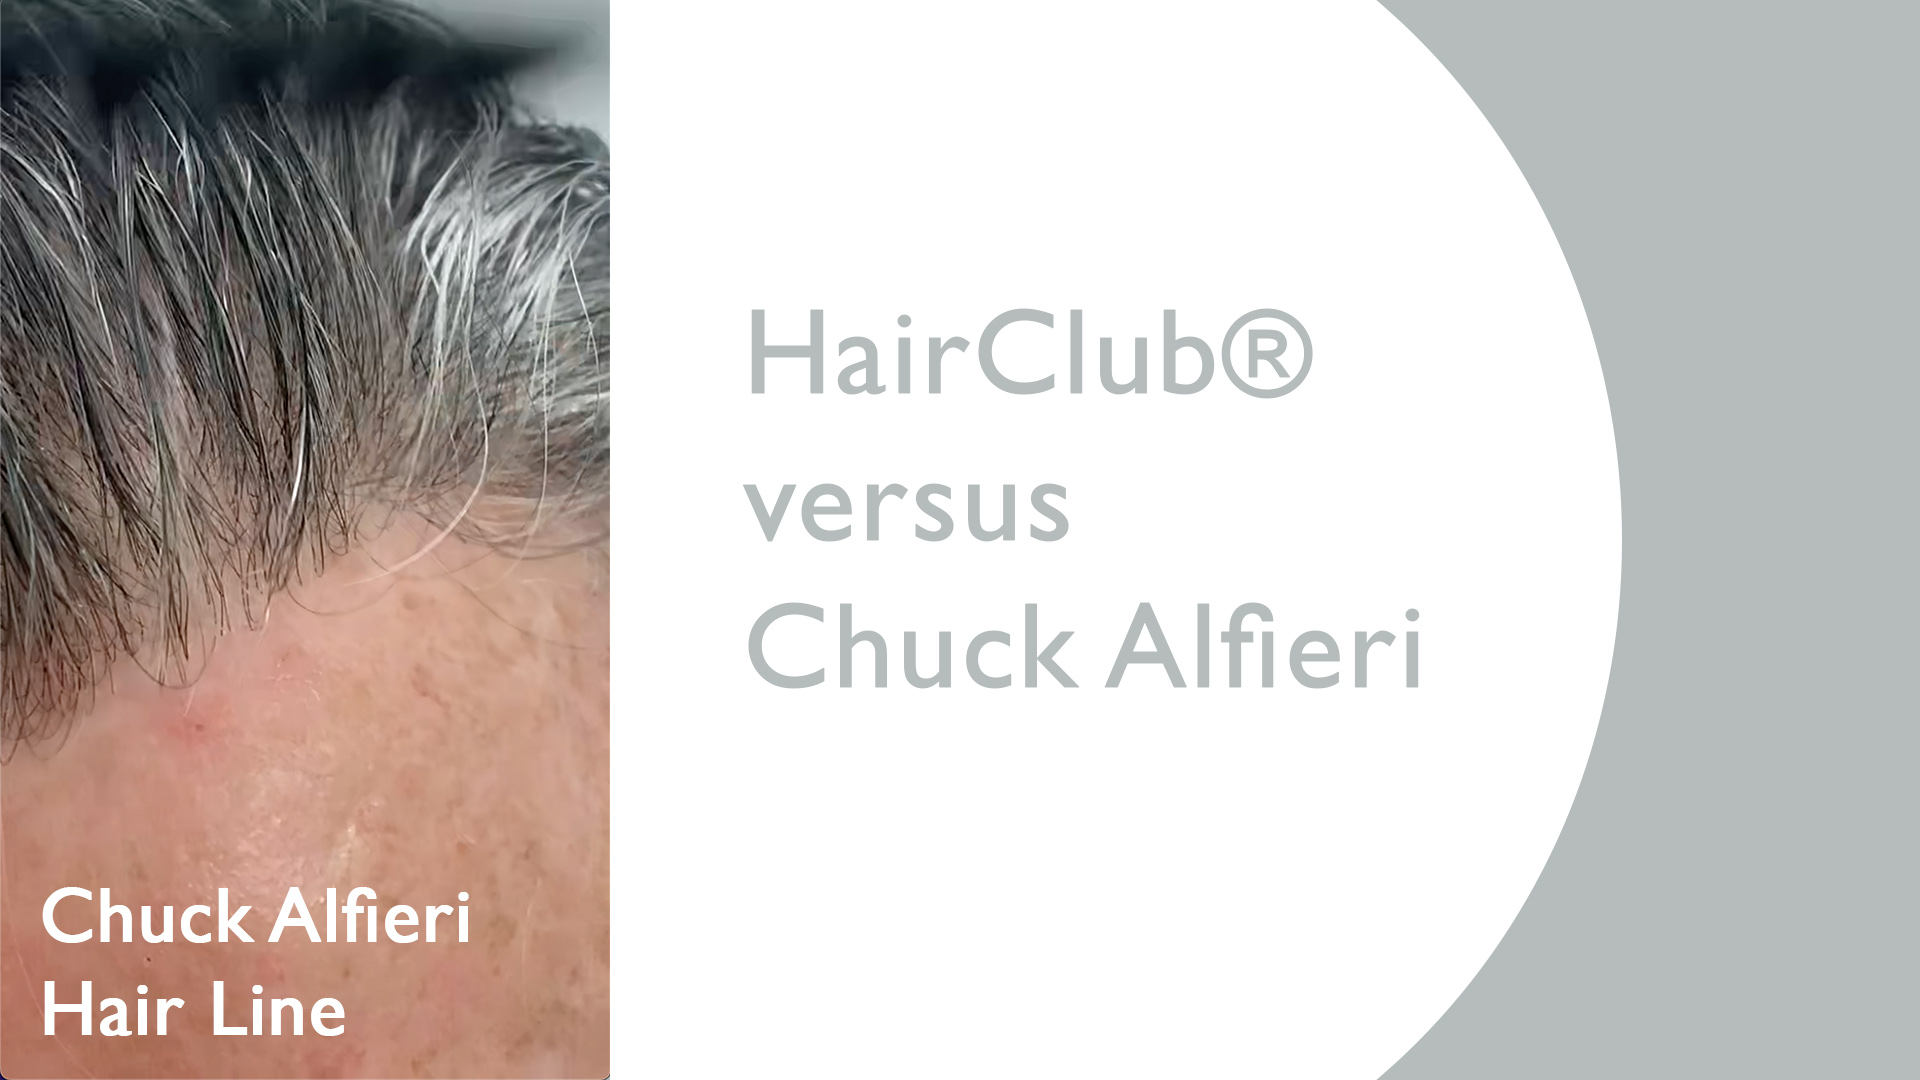 HairClub versus Chuck Alfieri